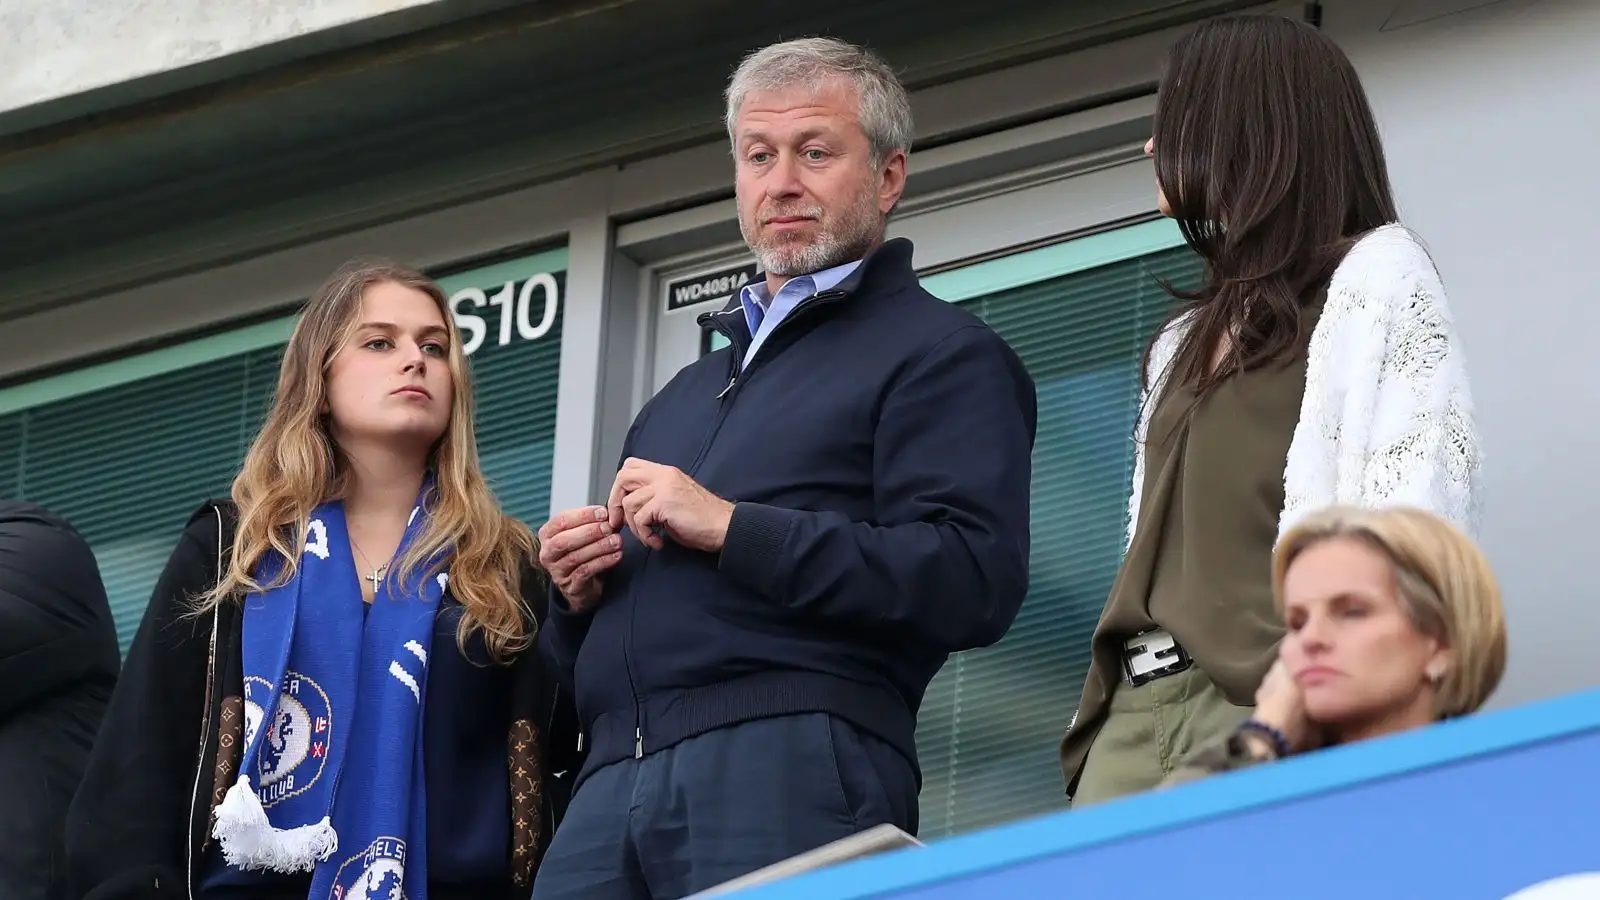 Chelsea ‘could face Premier League points deduction’ amid Abramovich allegations